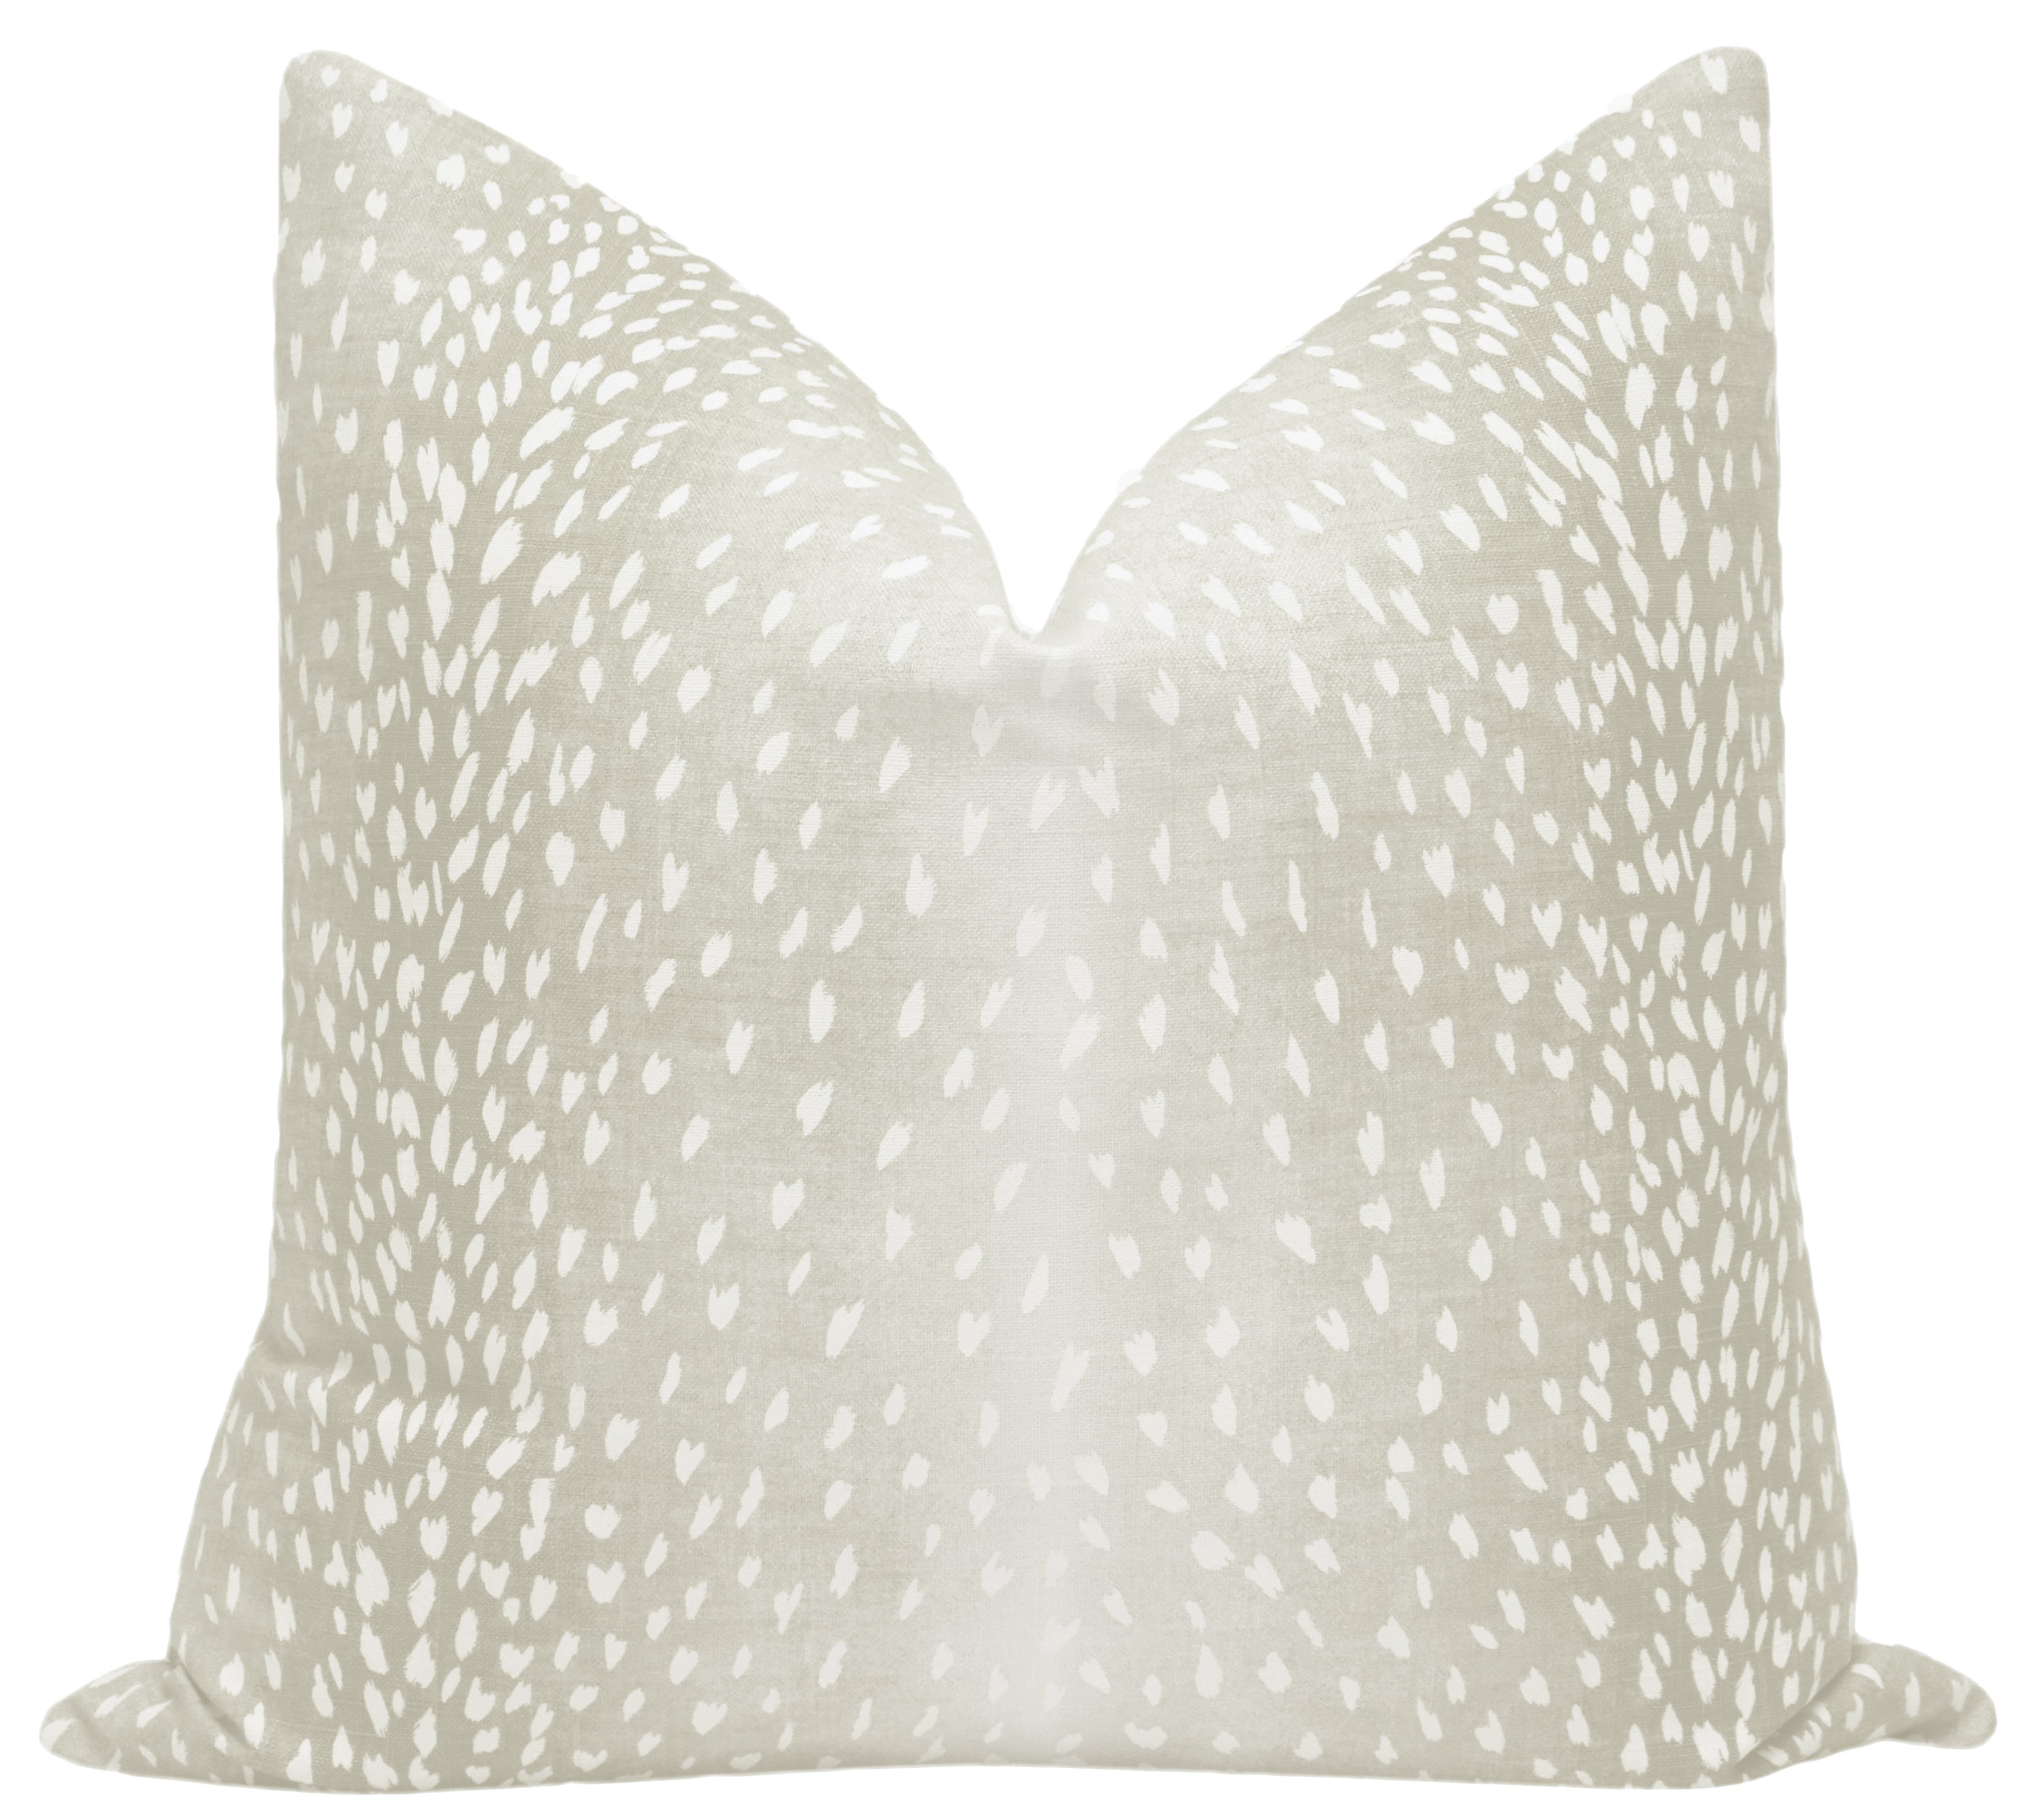 Antelope Linen Print Throw Pillow Cover, Cashmere, 18" x 18" - Little Design Company